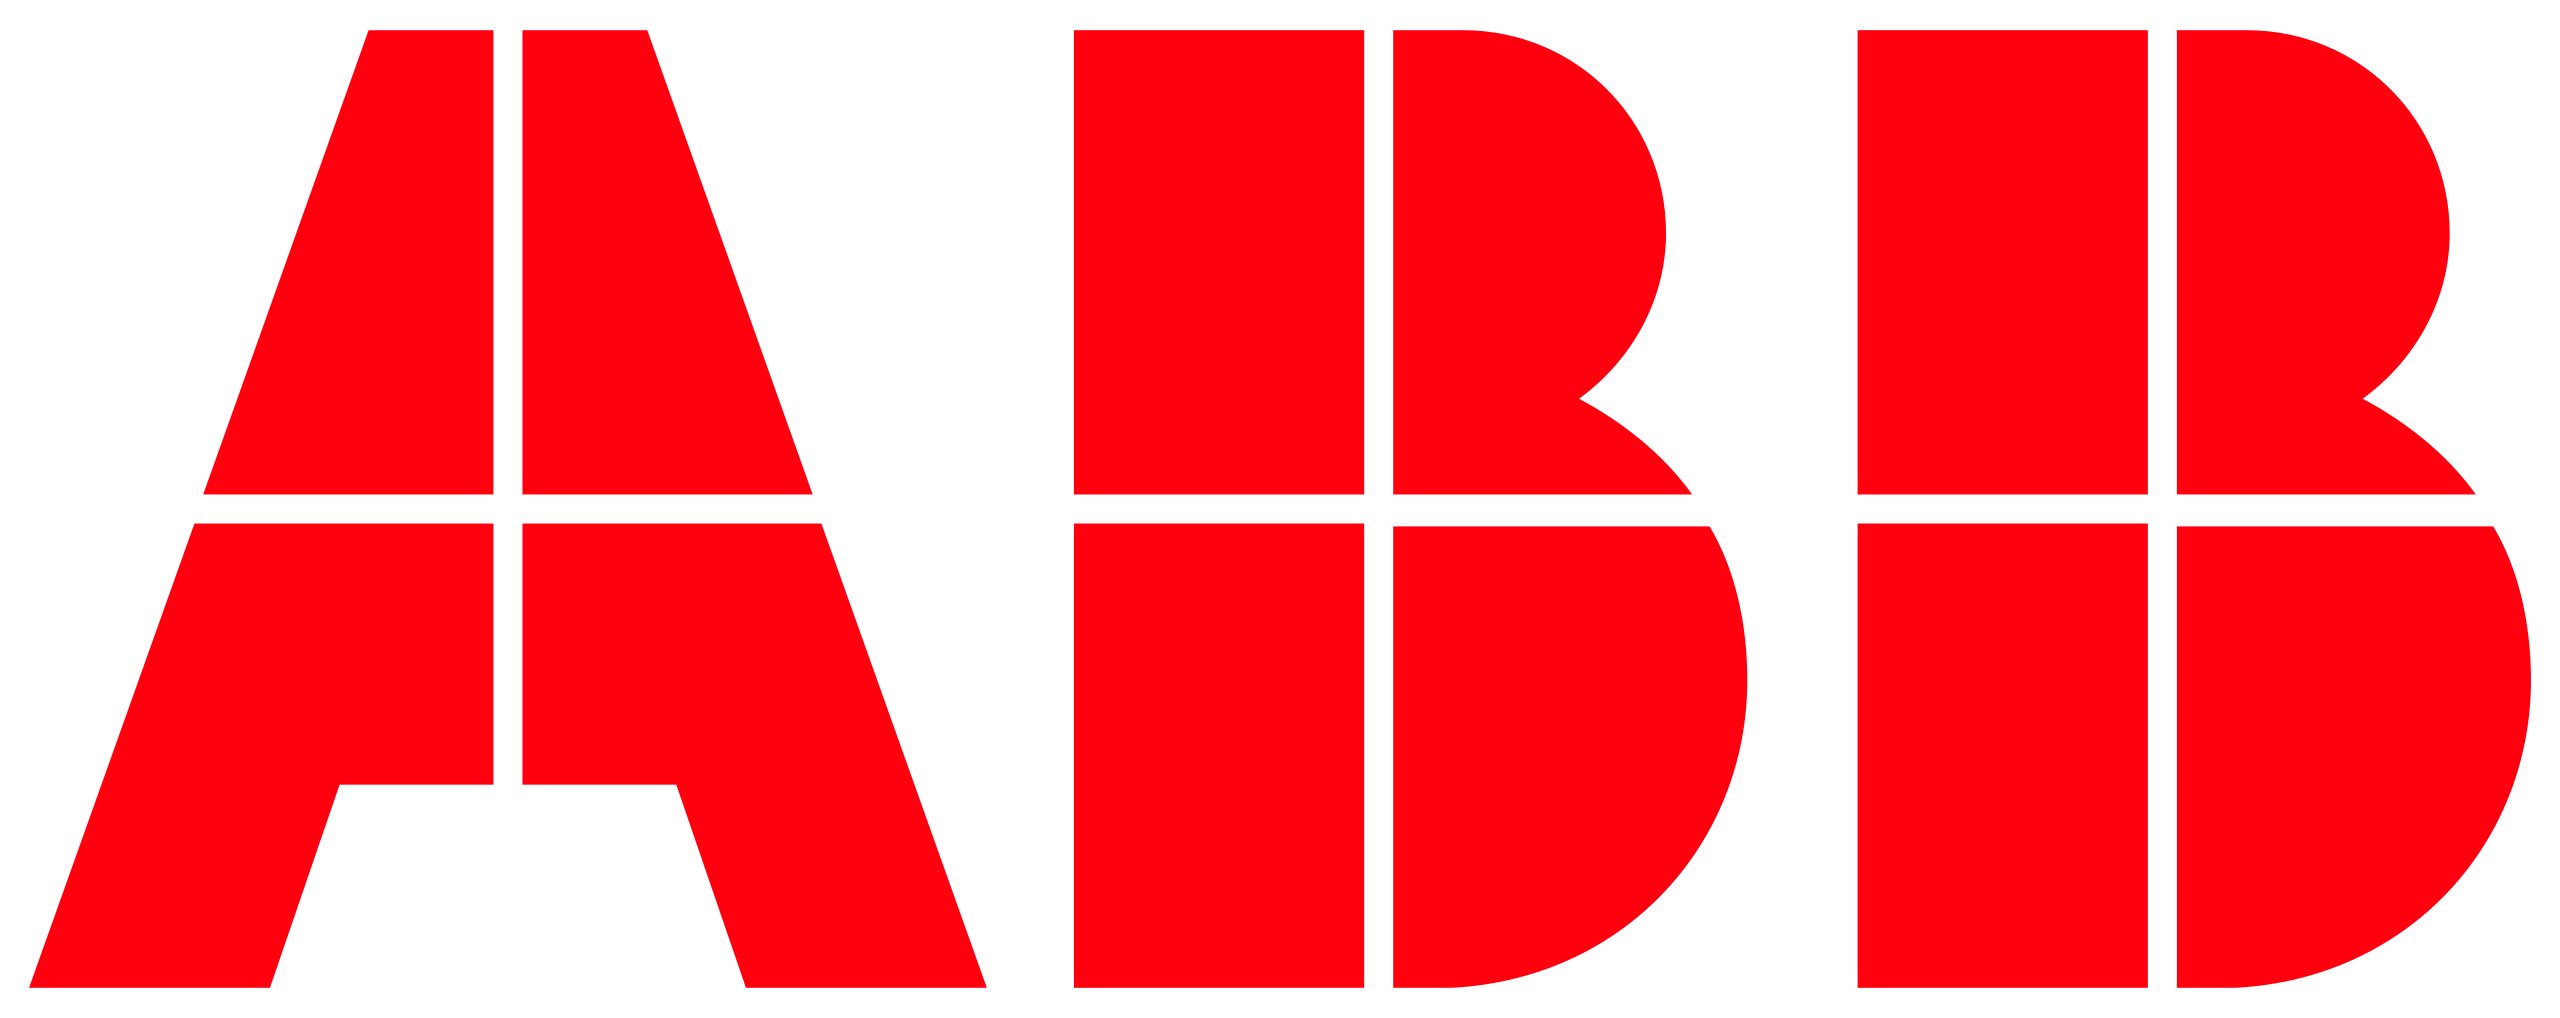 ABB-Protekol, dystrybucja pełna oferta i niskie ceny